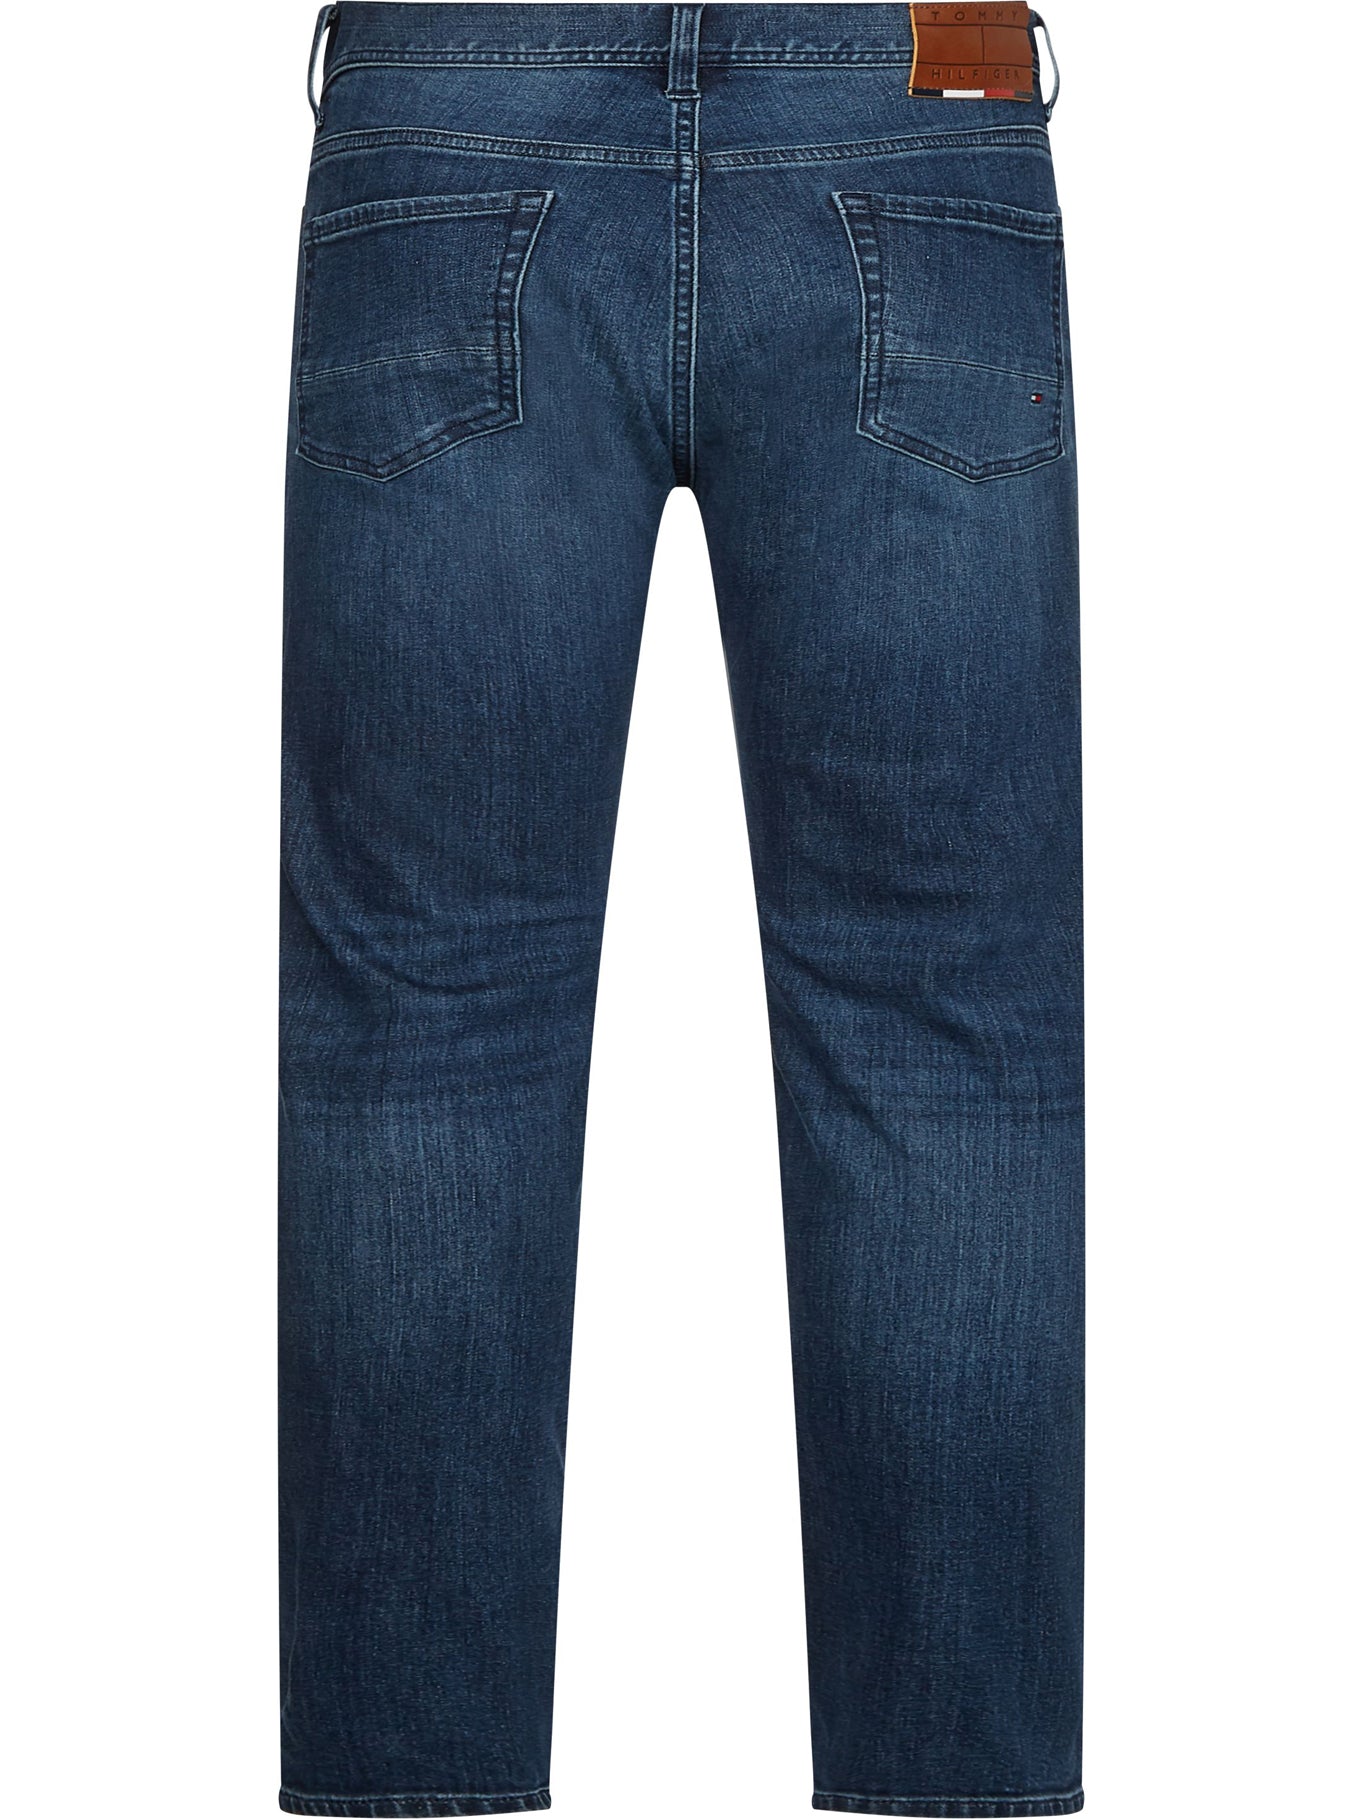 pantalon-jeans-tommy-hilfiger-p-caballeros-3